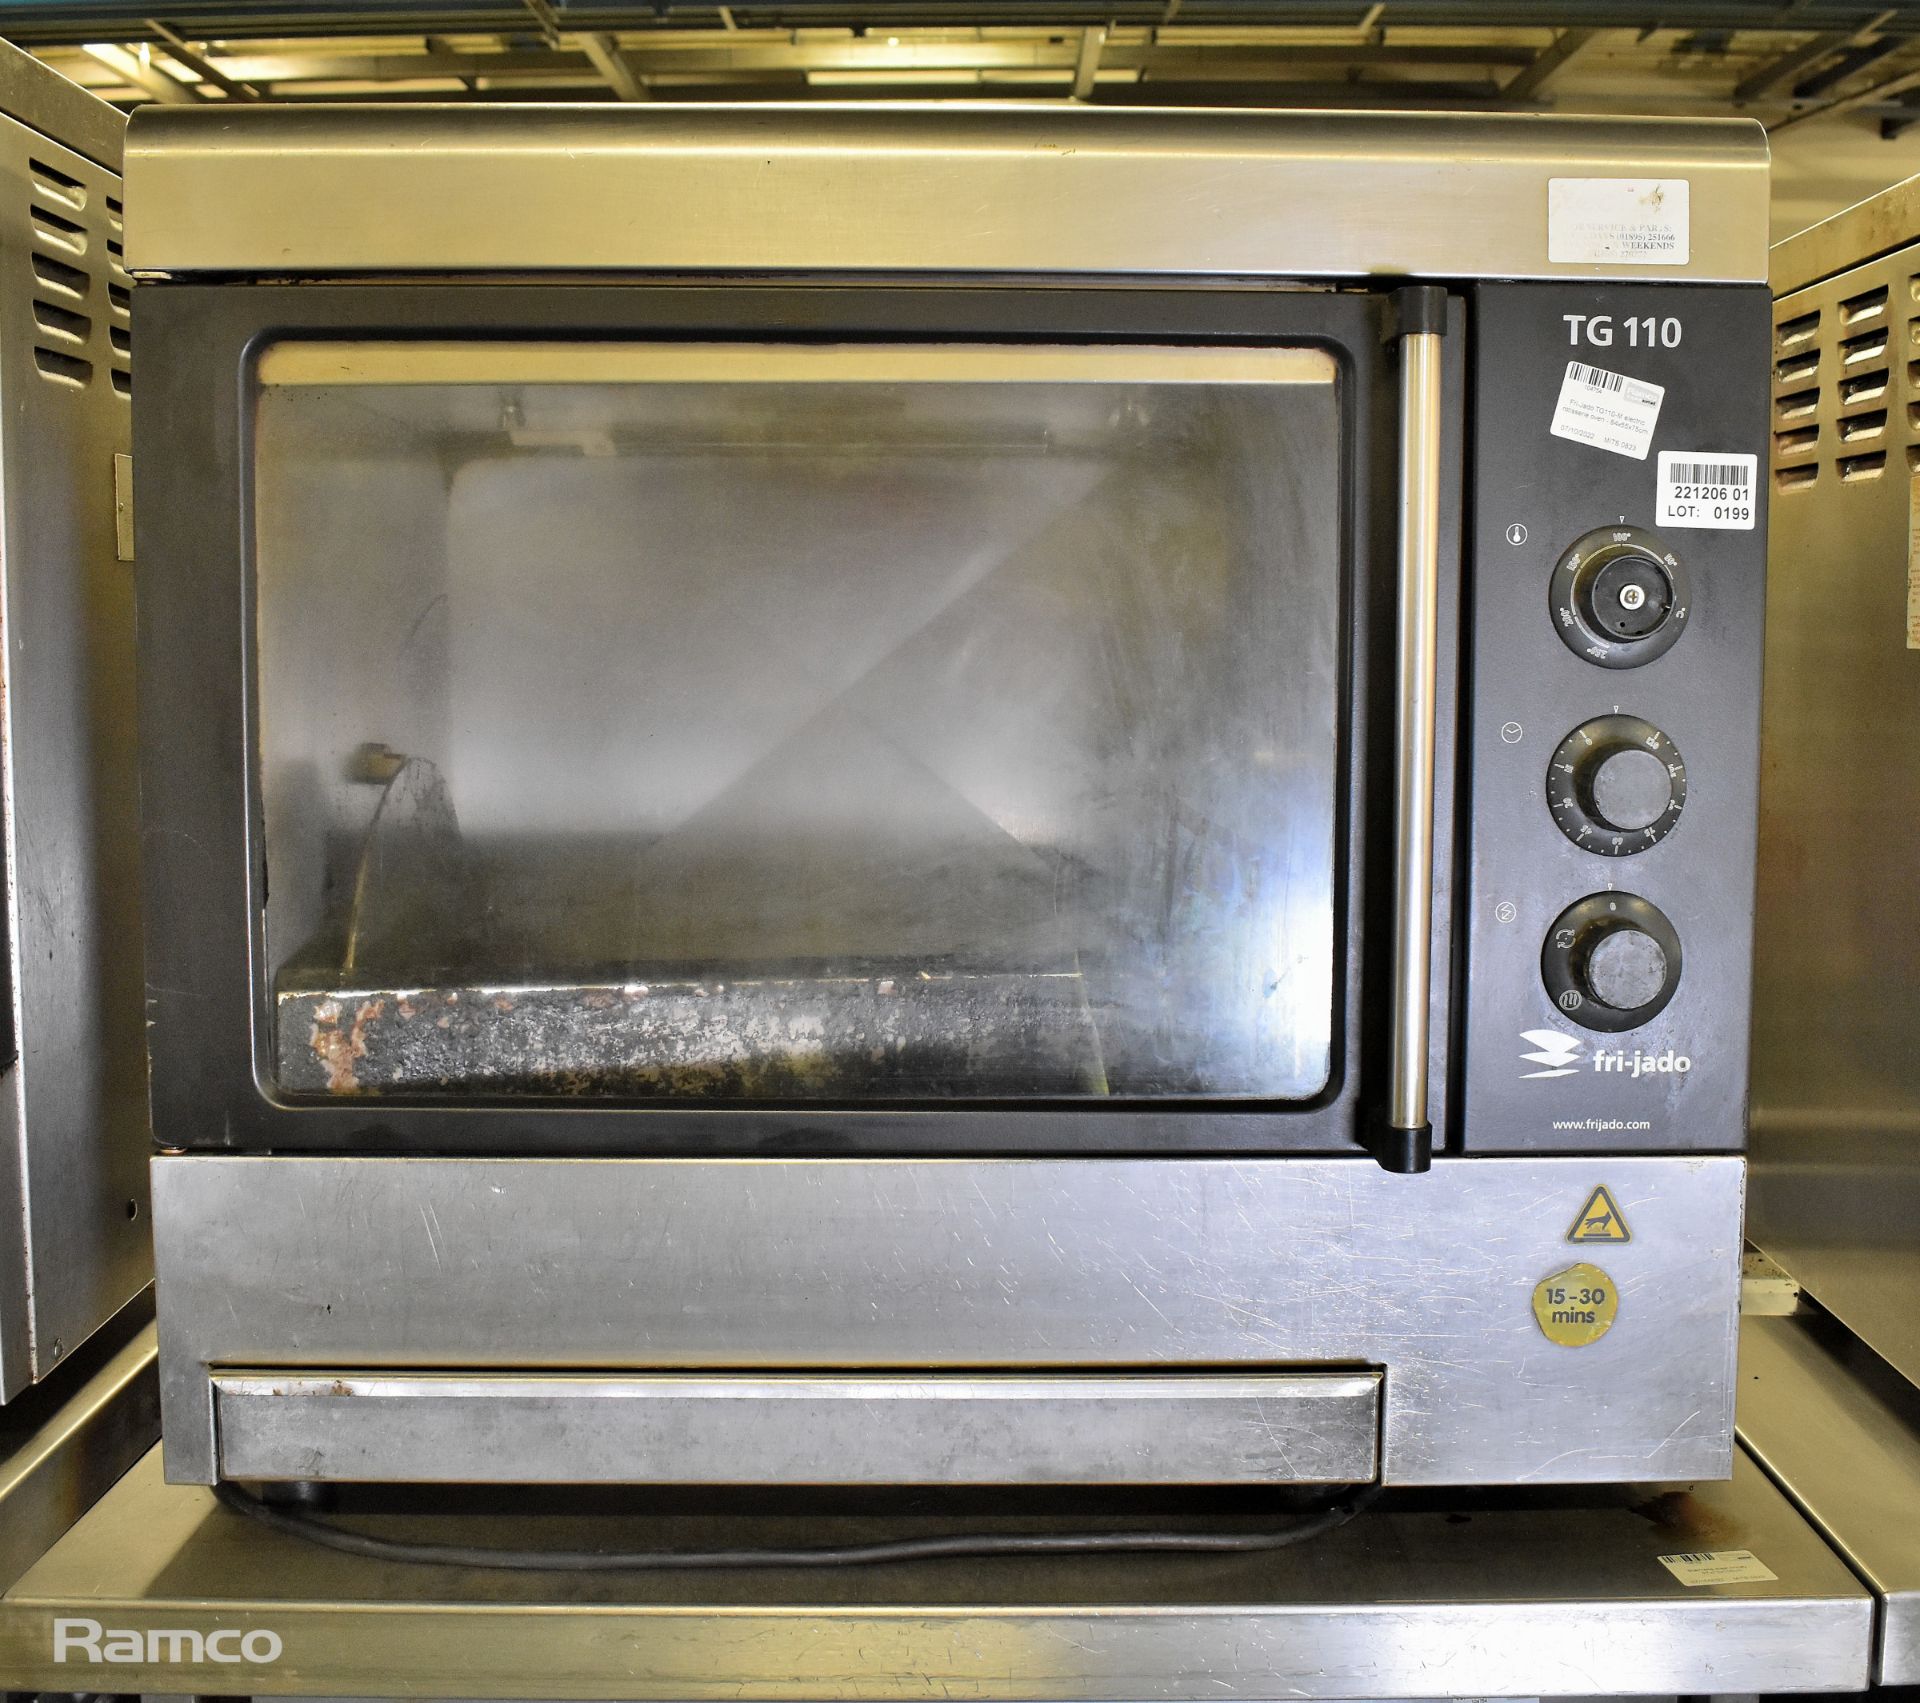 2x Fri-Jado TG110-M electric rotisserie ovens - 84 x 55 x 75cm, Stainless steel trolley - Image 2 of 7